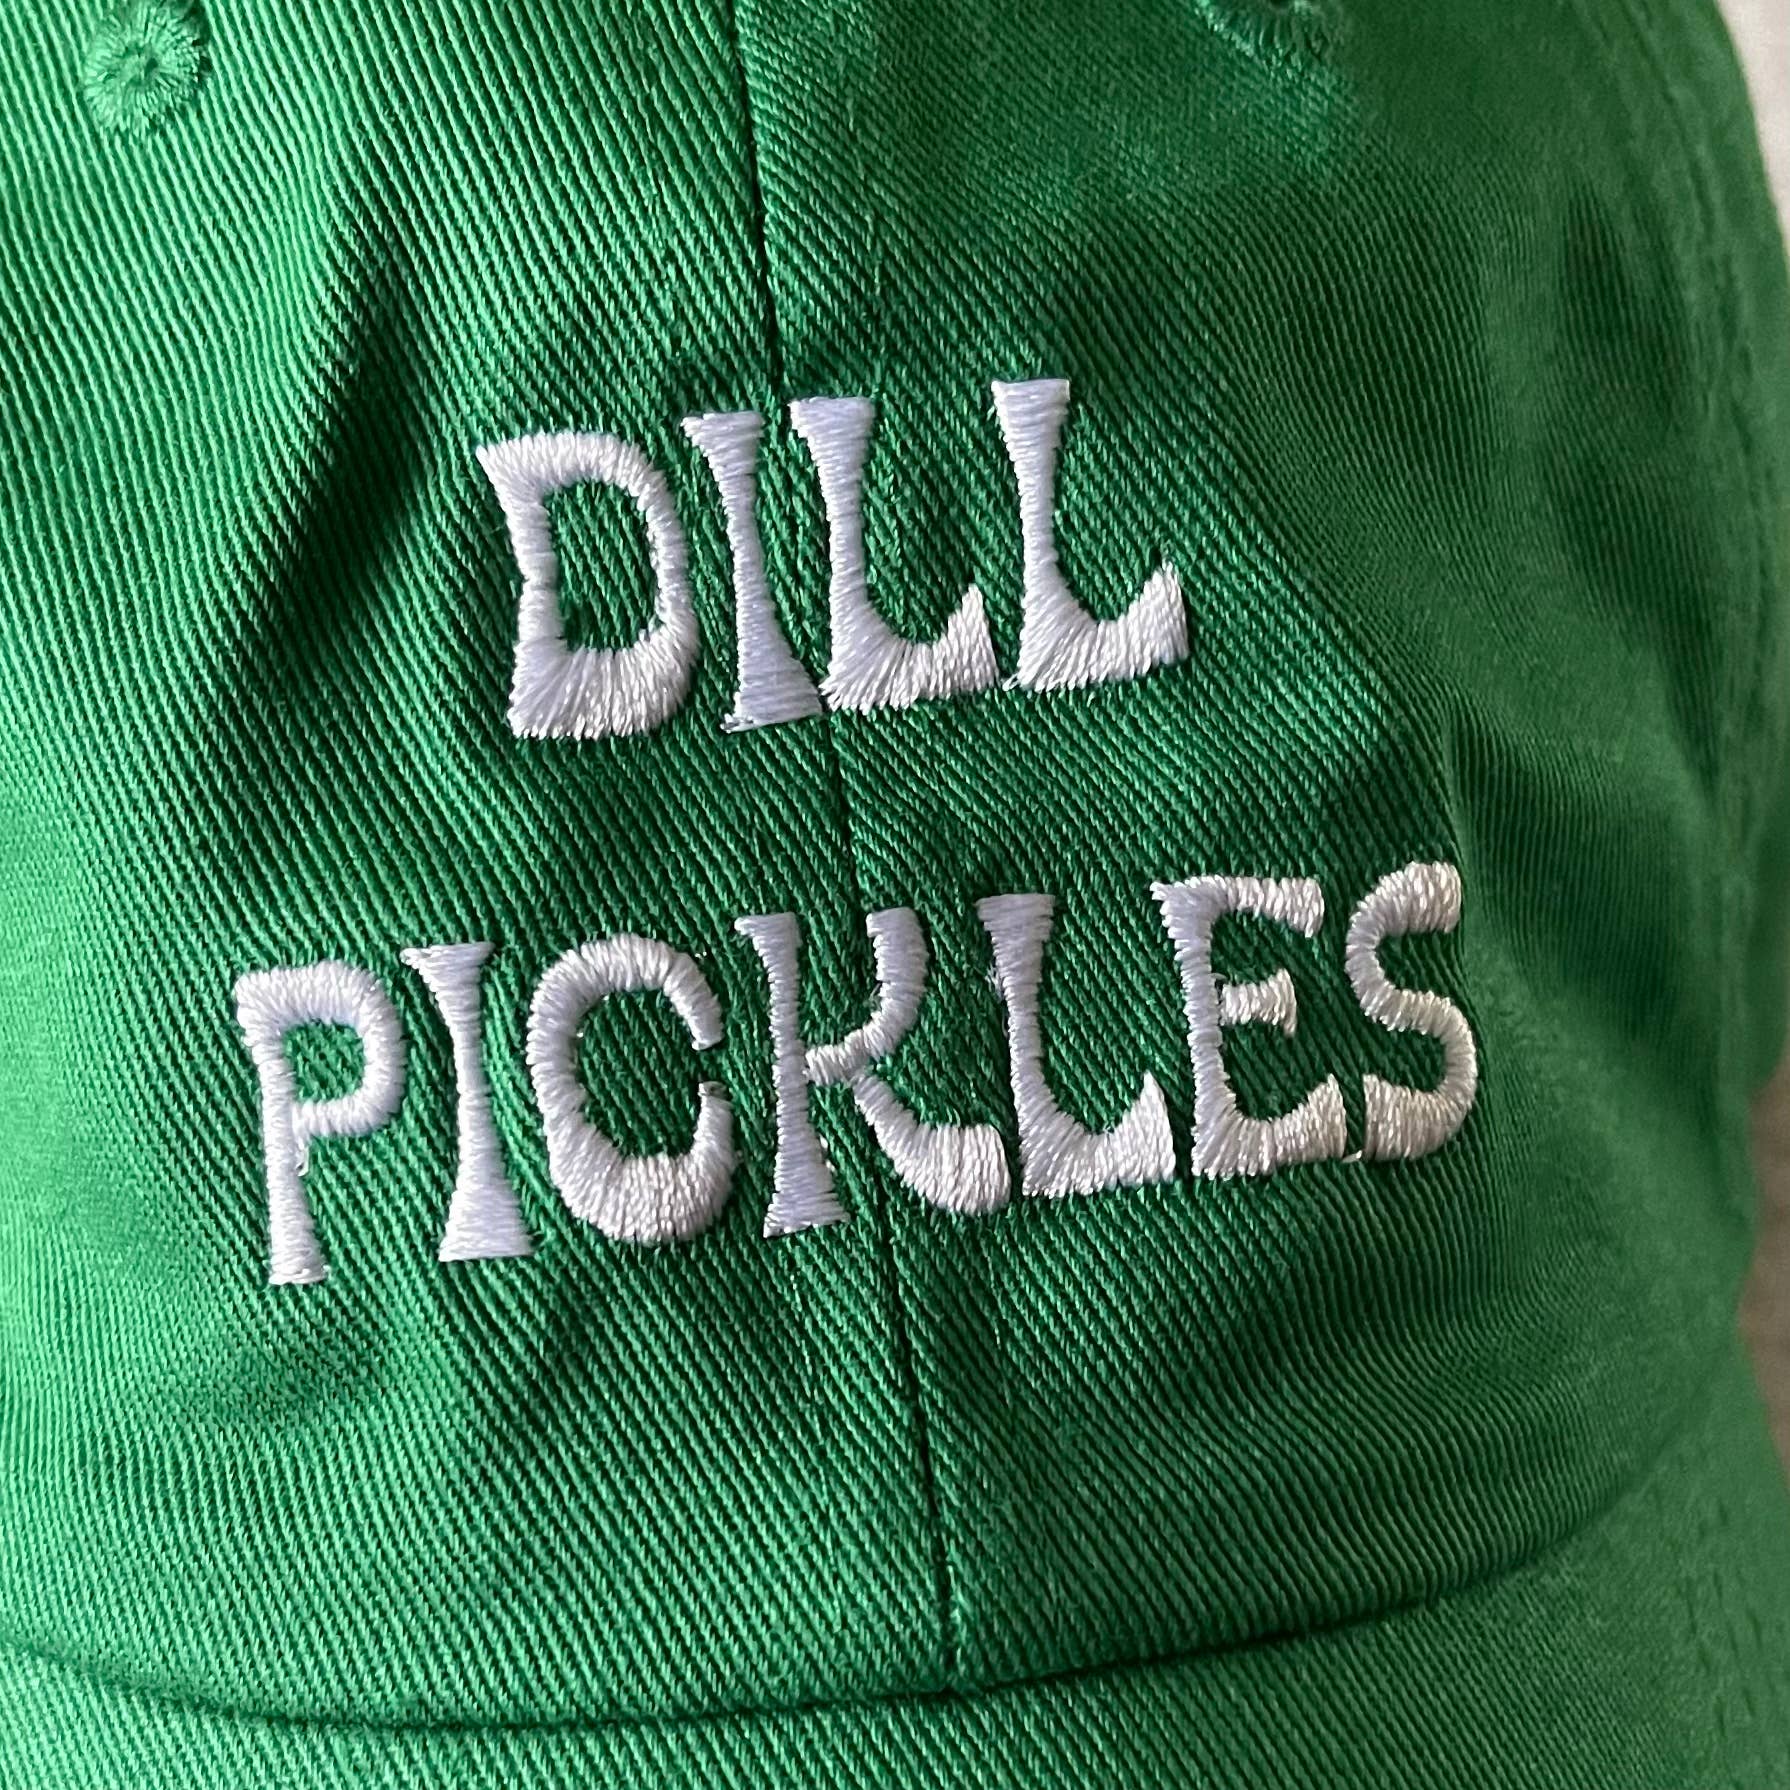 Dill Pickles Baseball Cap Unisex Dad Hat